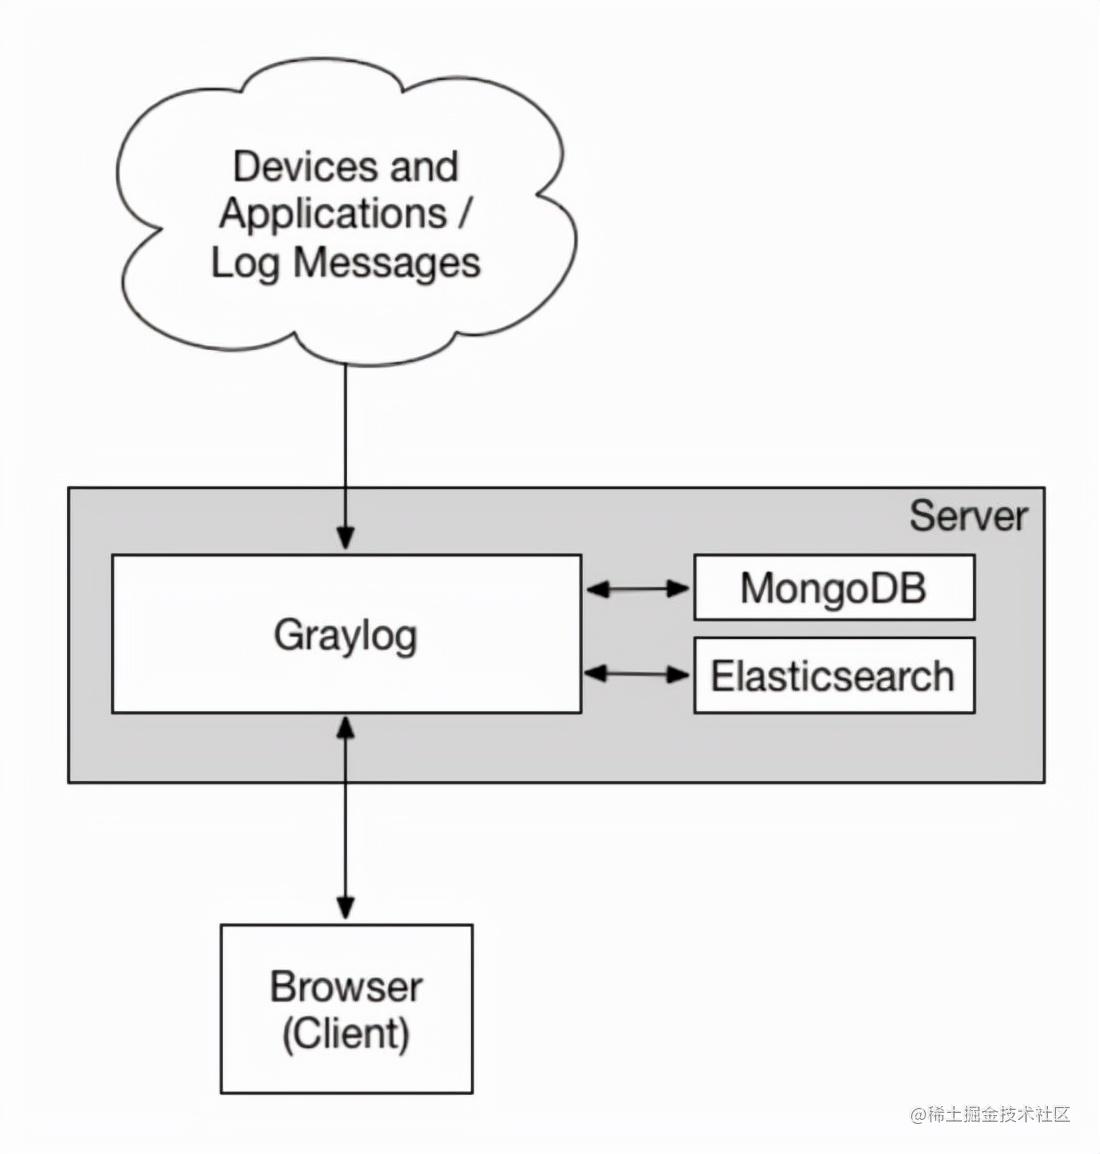 SpringBoot accesses a lightweight distributed log framework (GrayLog)